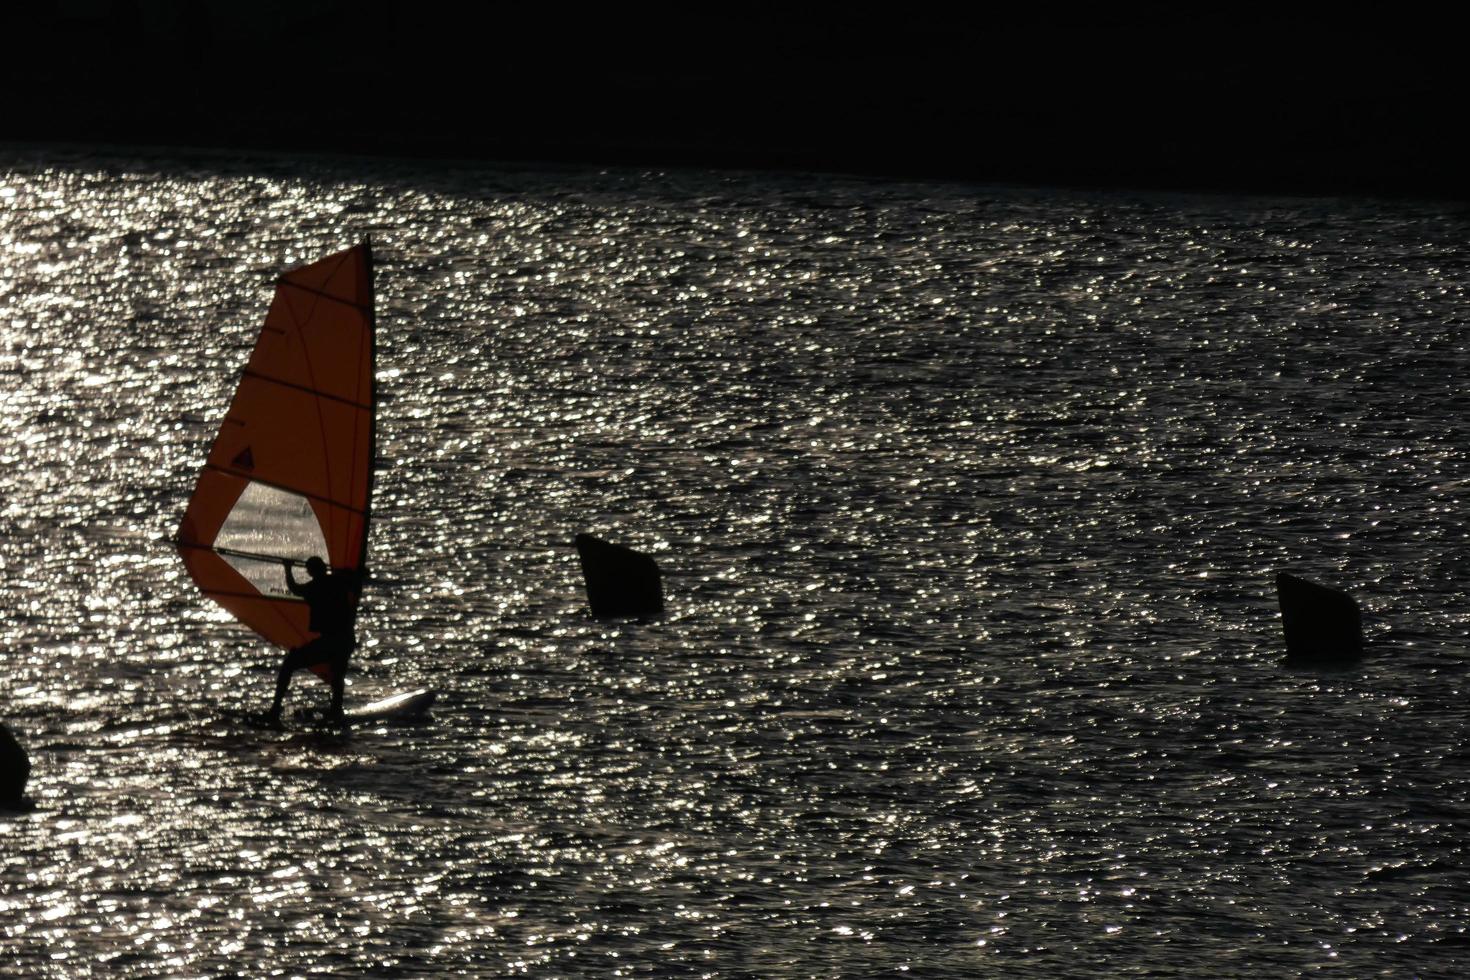 beoefenen het windsurfen in de middellandse Zee zee, kalmte zee foto